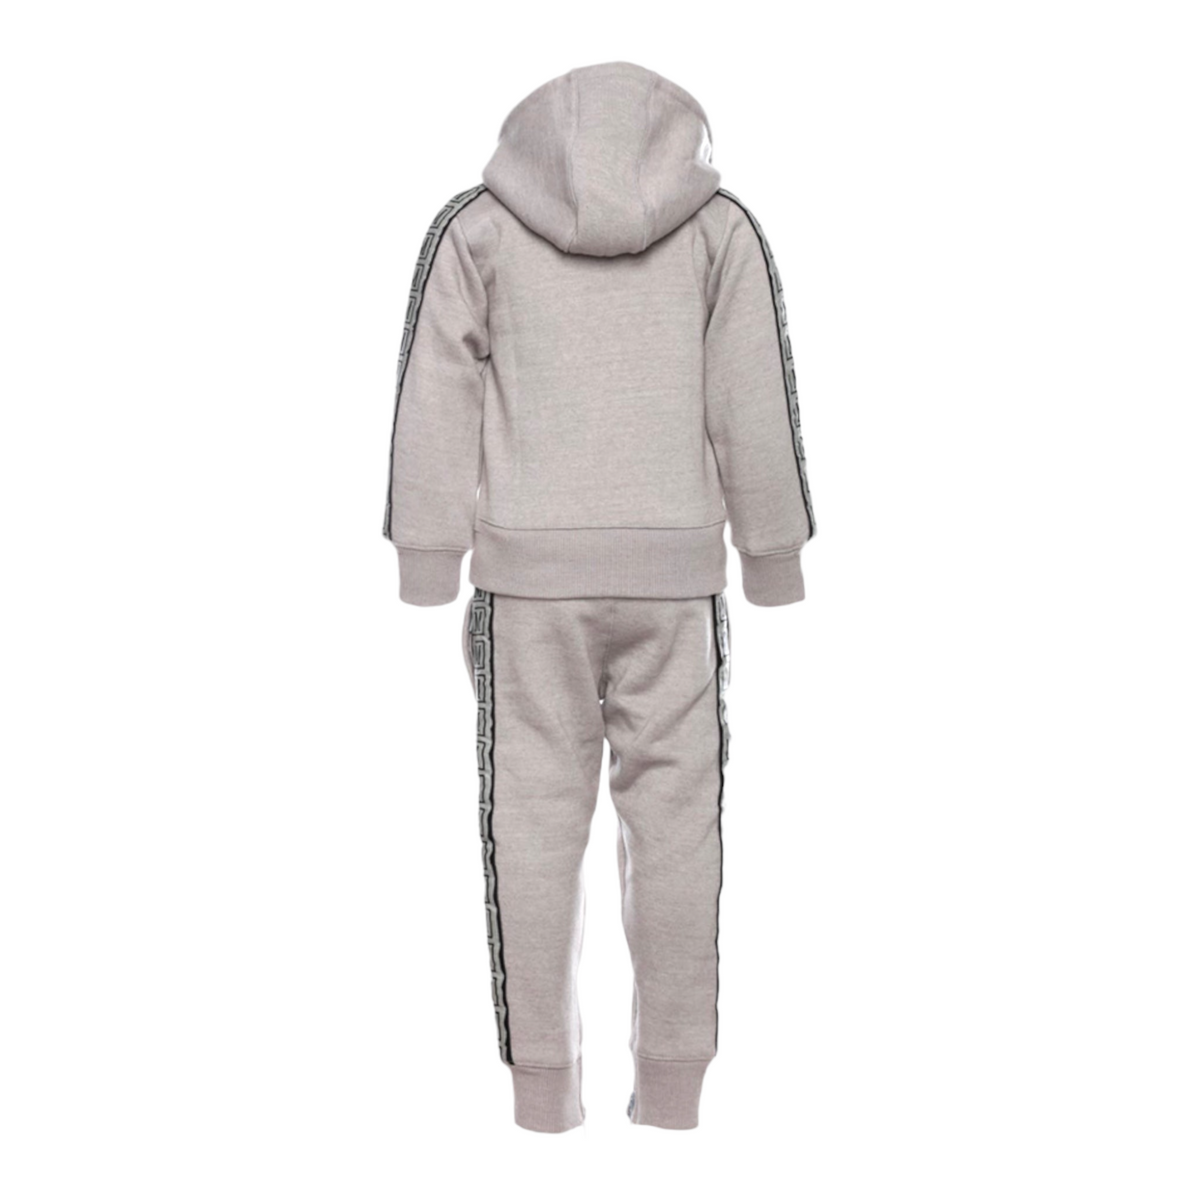 MDB Brand Kid's Classic Fleece Hooded Sweatsuit - Light Grey